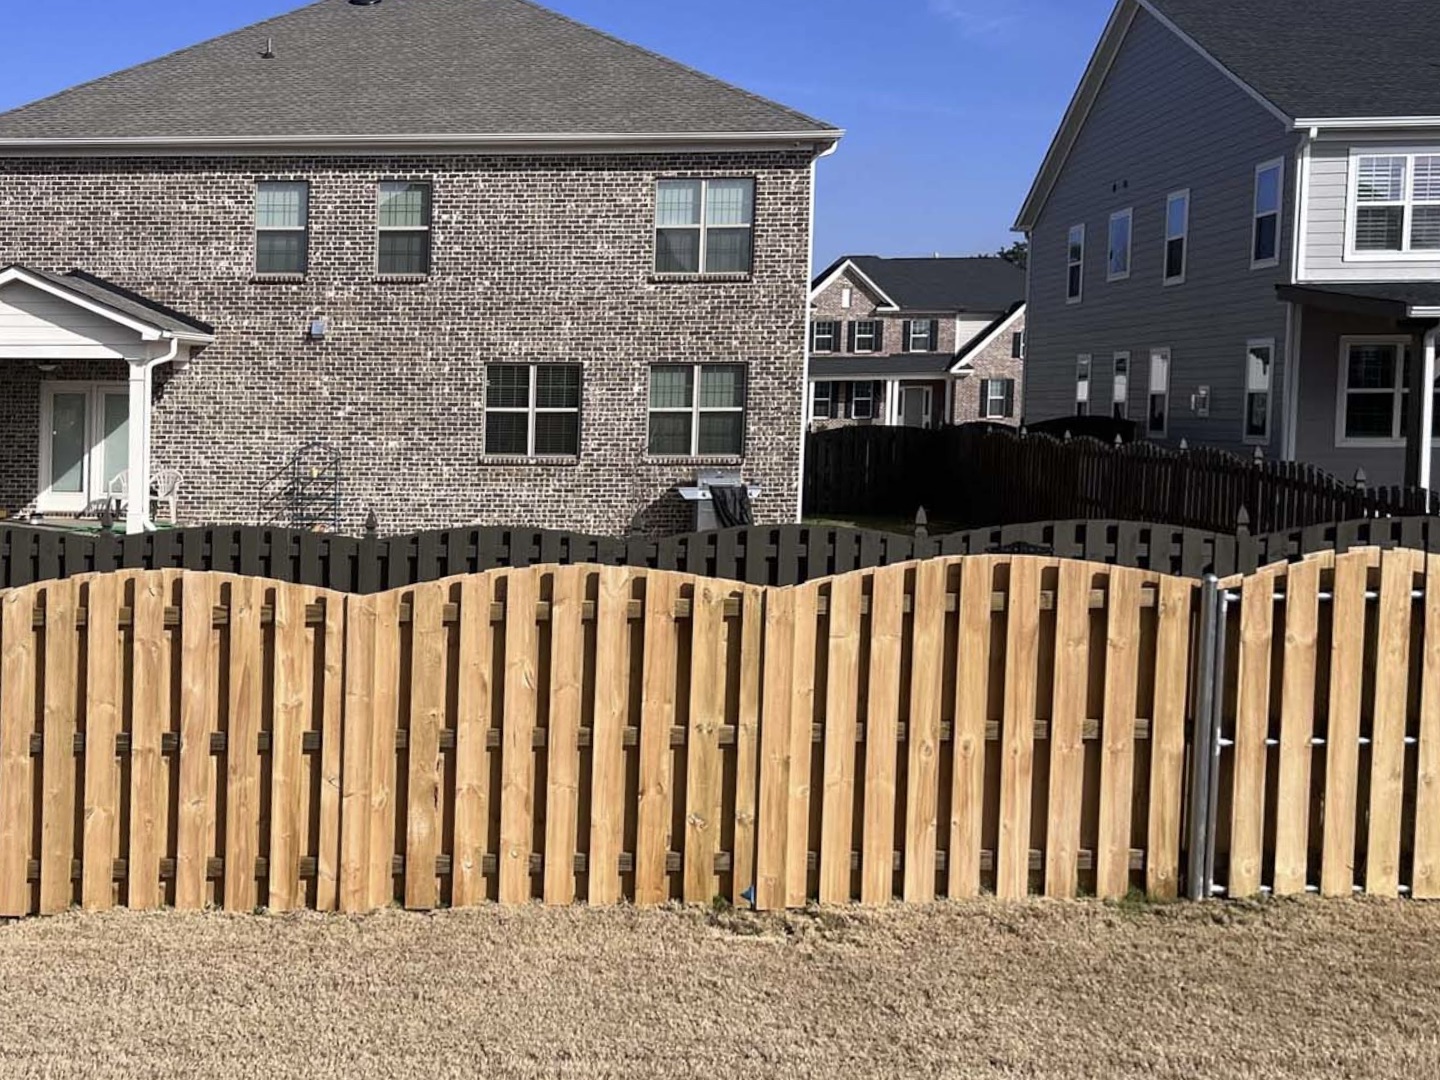 Photo of a Huntsville AL wood fence